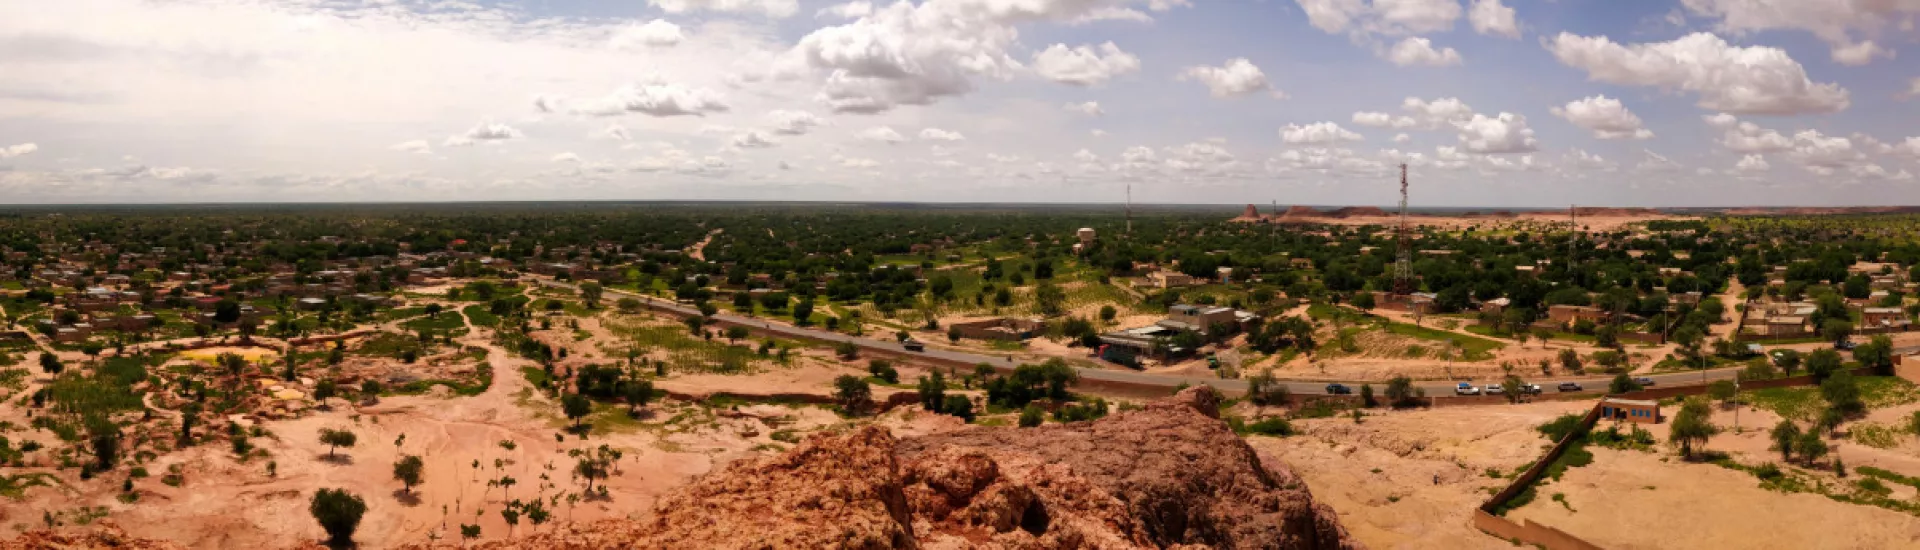 panorama of Niger